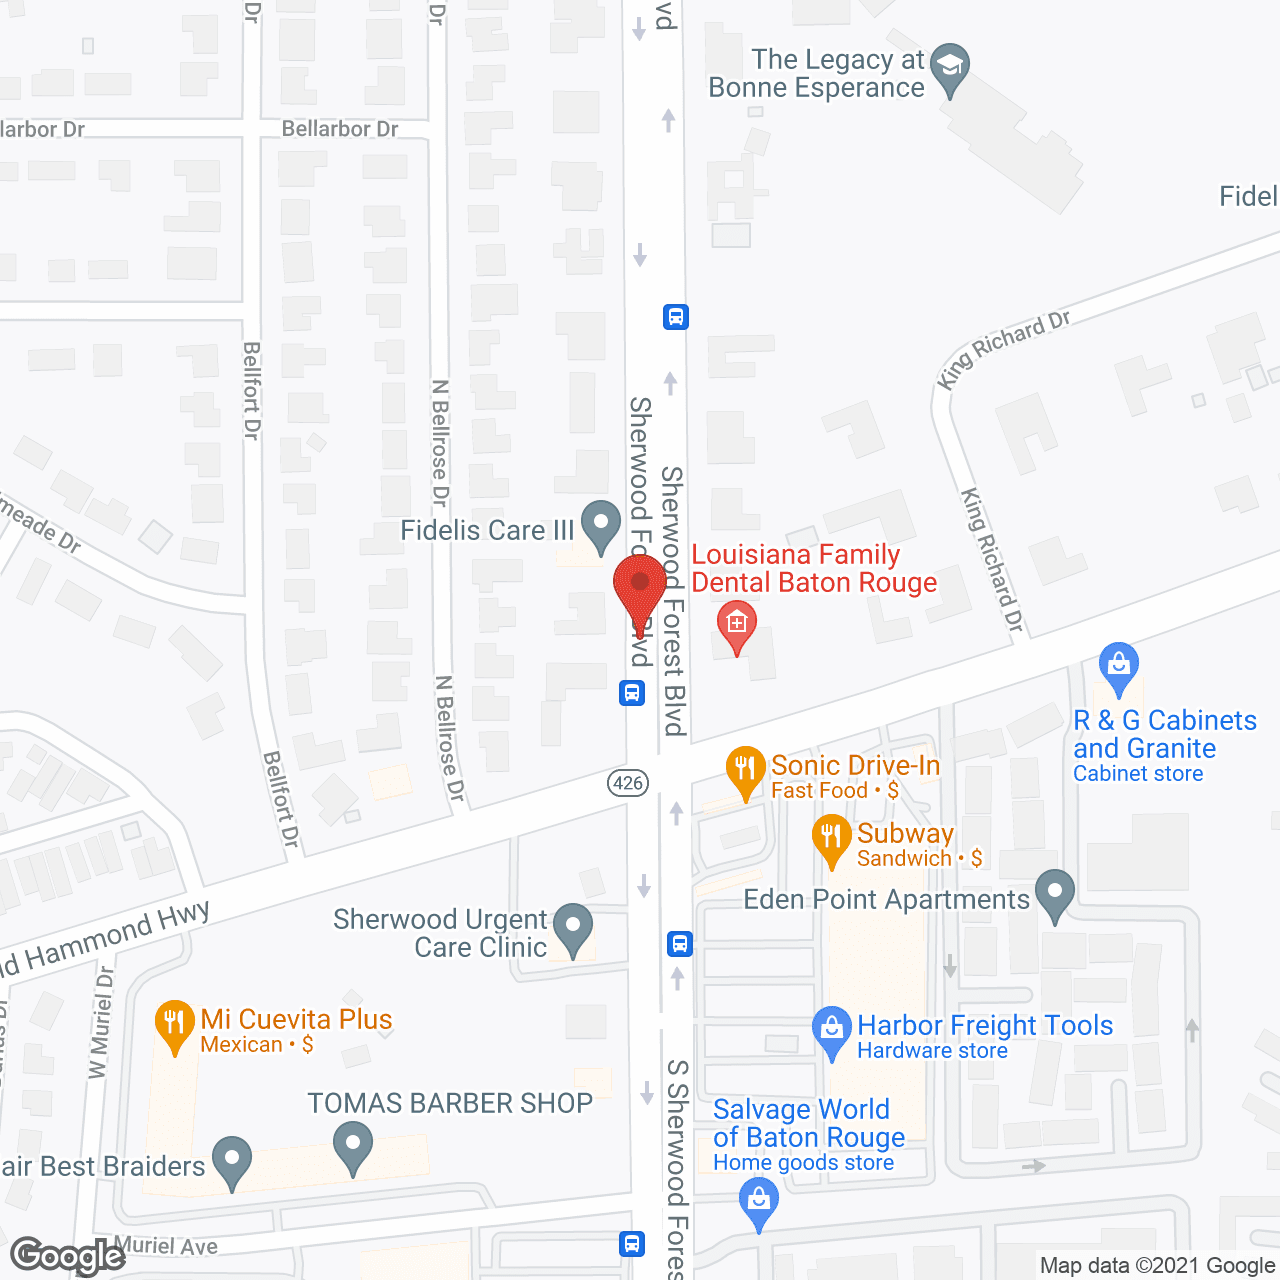 Fidelis Care III in google map